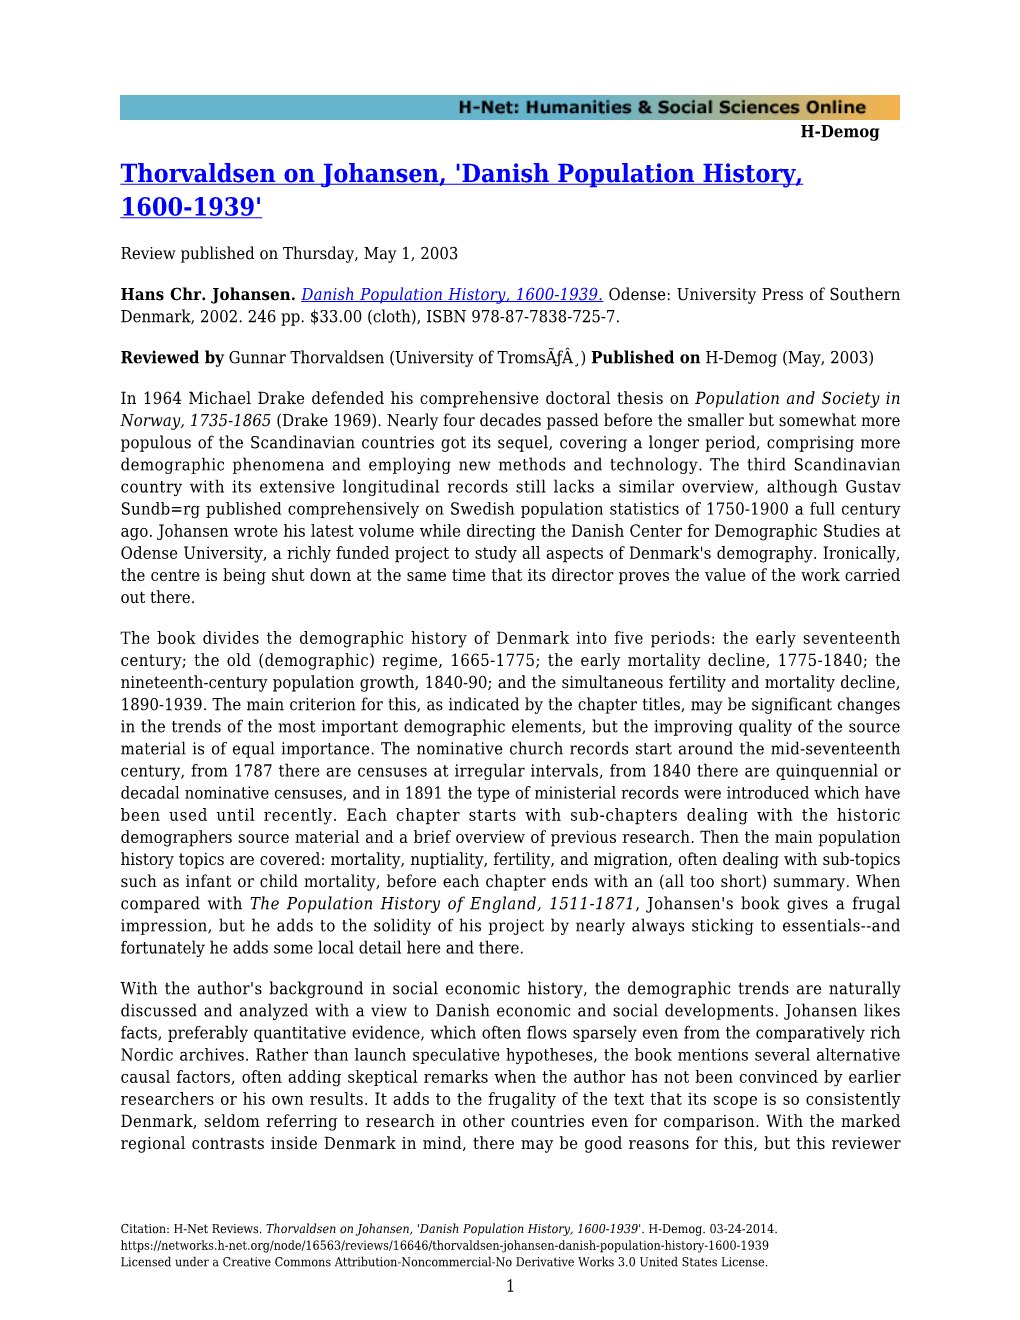 Thorvaldsen on Johansen, 'Danish Population History, 1600-1939'